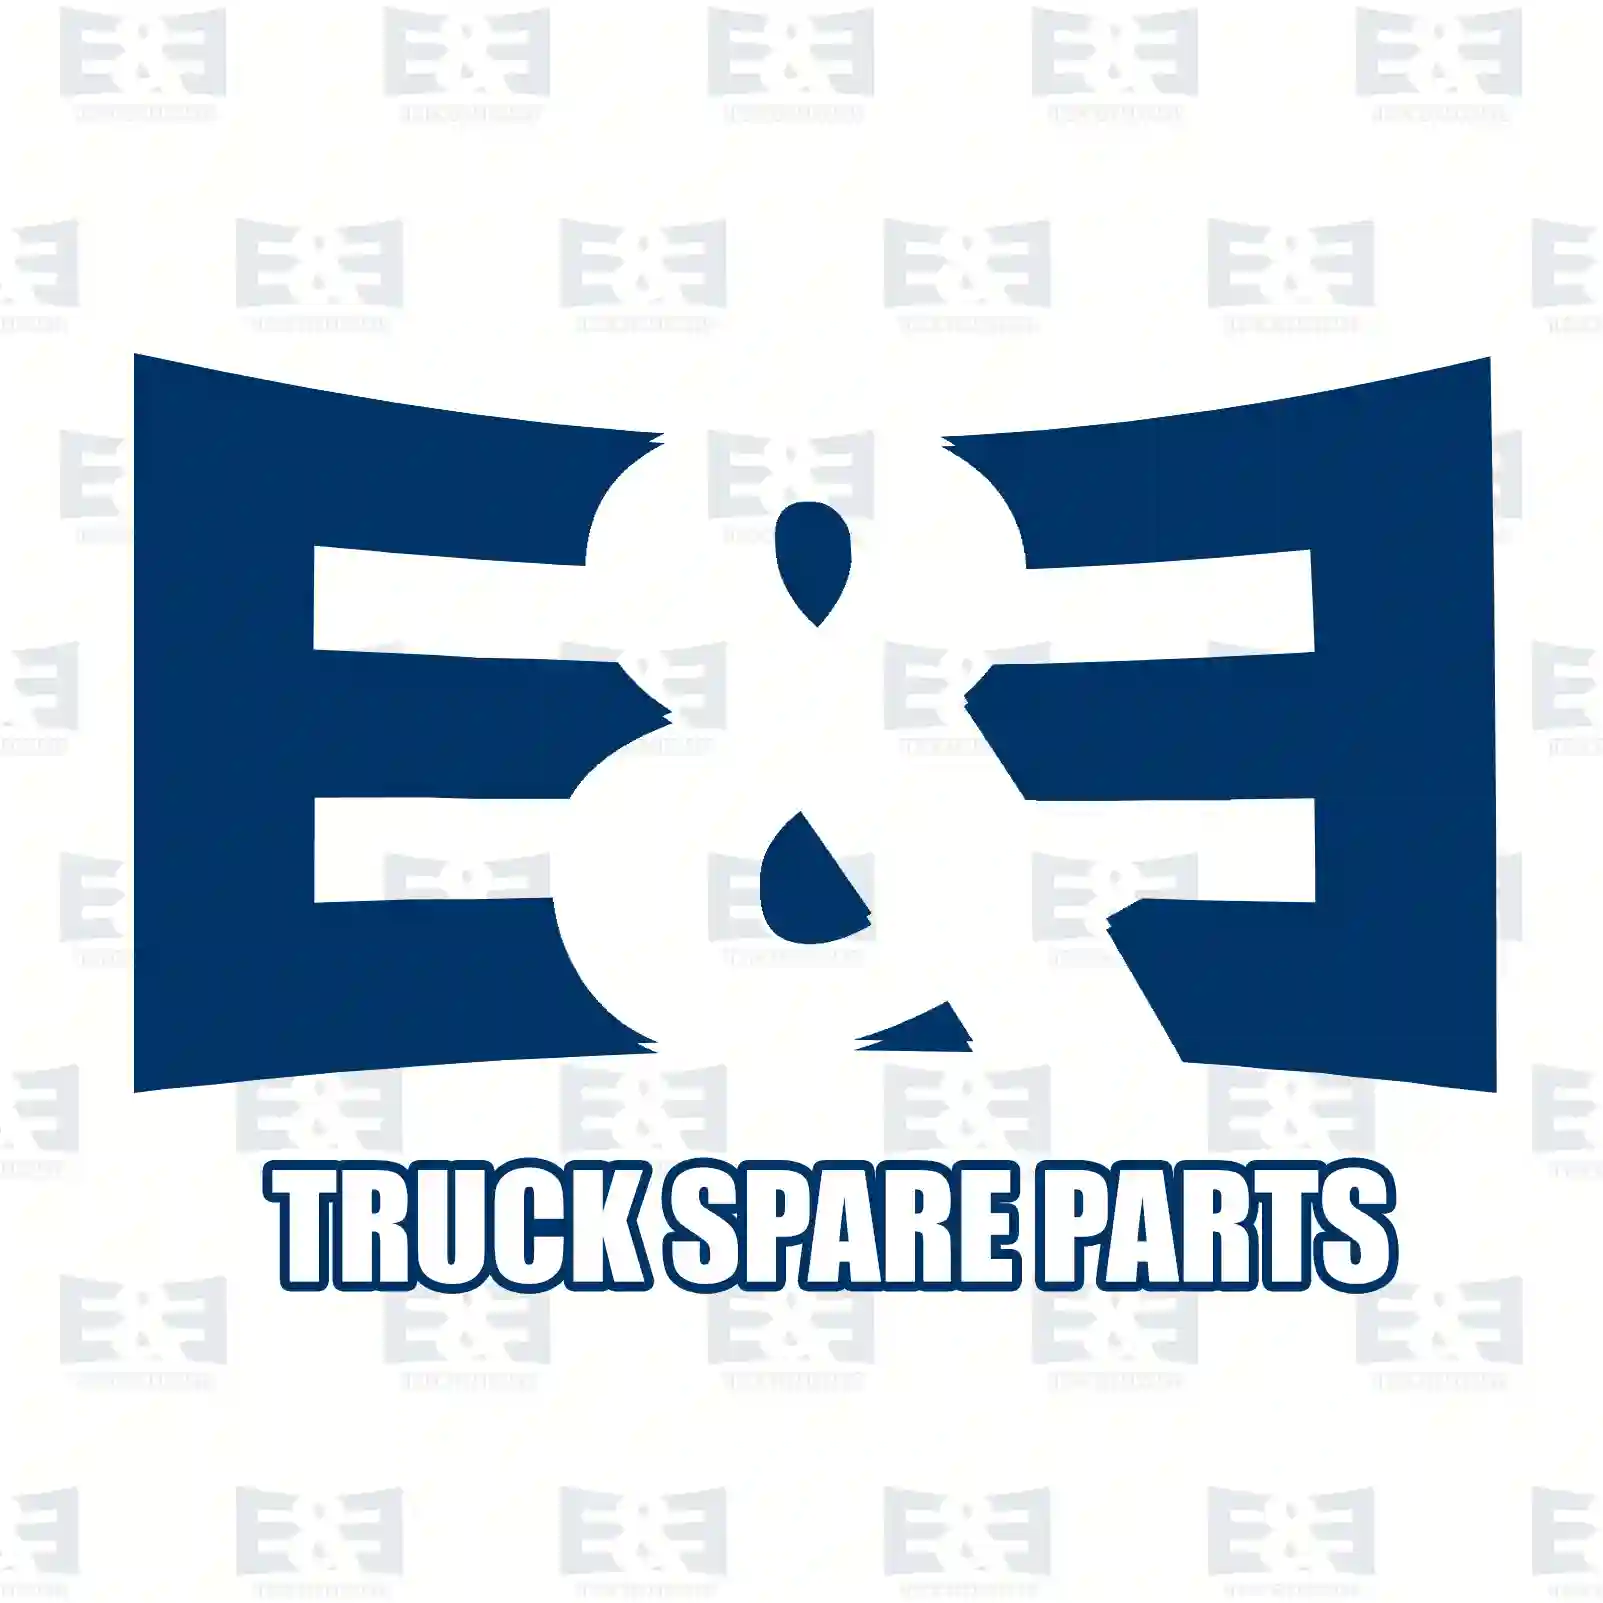 Gasket kit, power-take-off, 2E2277366, 2200141 ||  2E2277366 E&E Truck Spare Parts | Truck Spare Parts, Auotomotive Spare Parts Gasket kit, power-take-off, 2E2277366, 2200141 ||  2E2277366 E&E Truck Spare Parts | Truck Spare Parts, Auotomotive Spare Parts